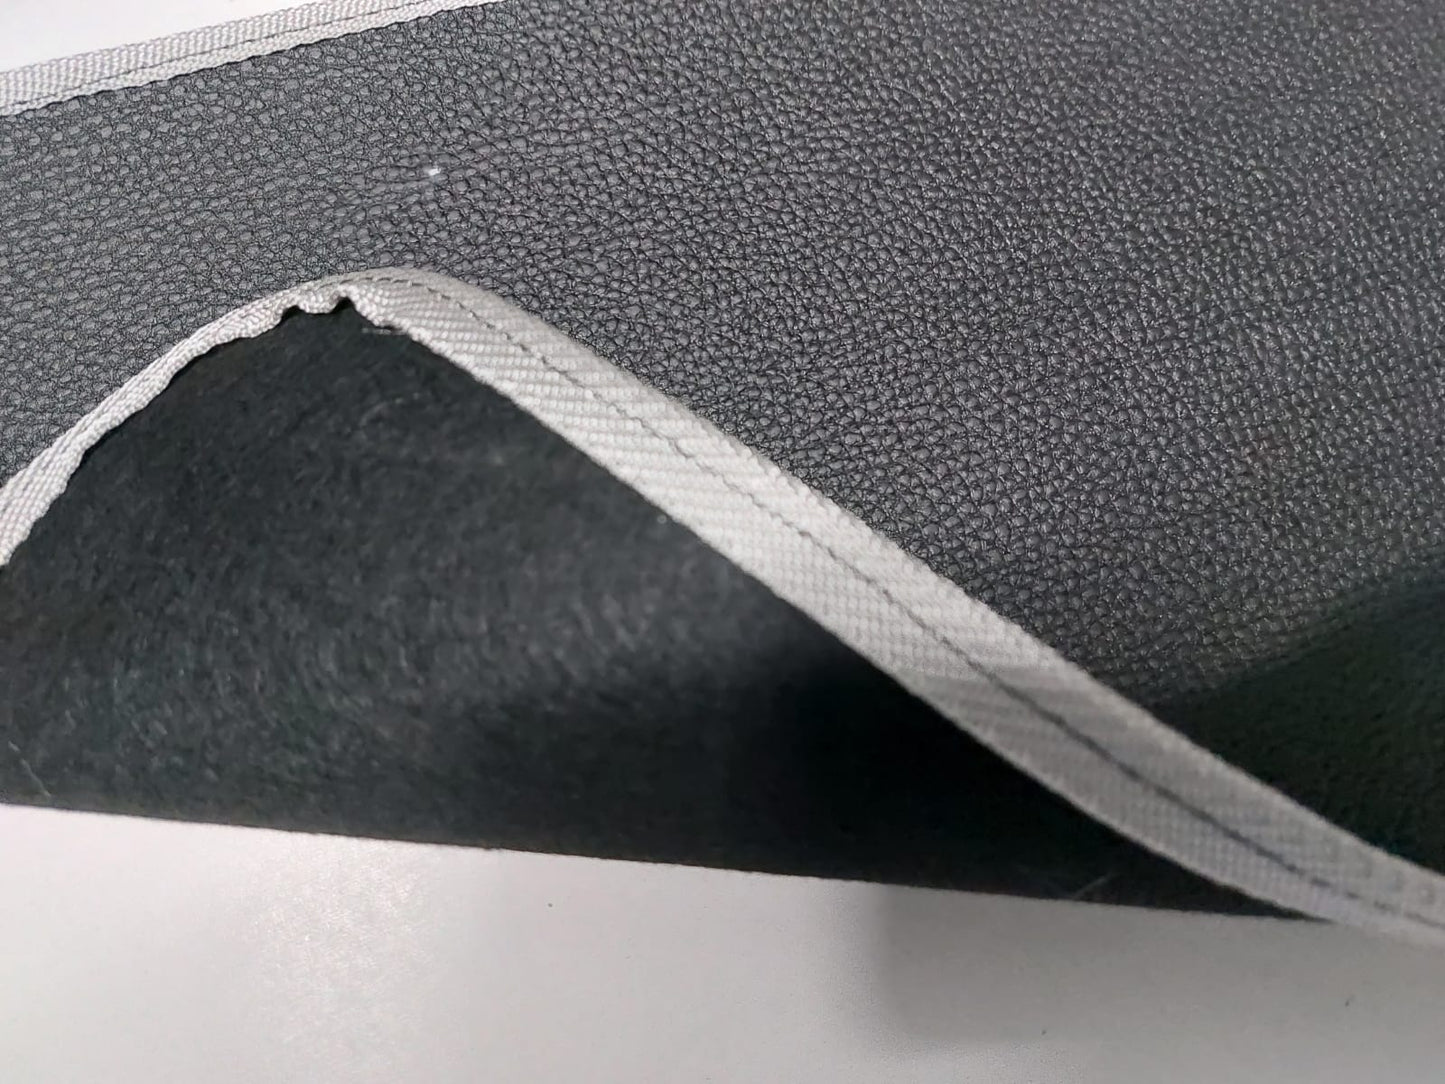 Hyundai Universal PVC Leather Floor Mats Set of 5